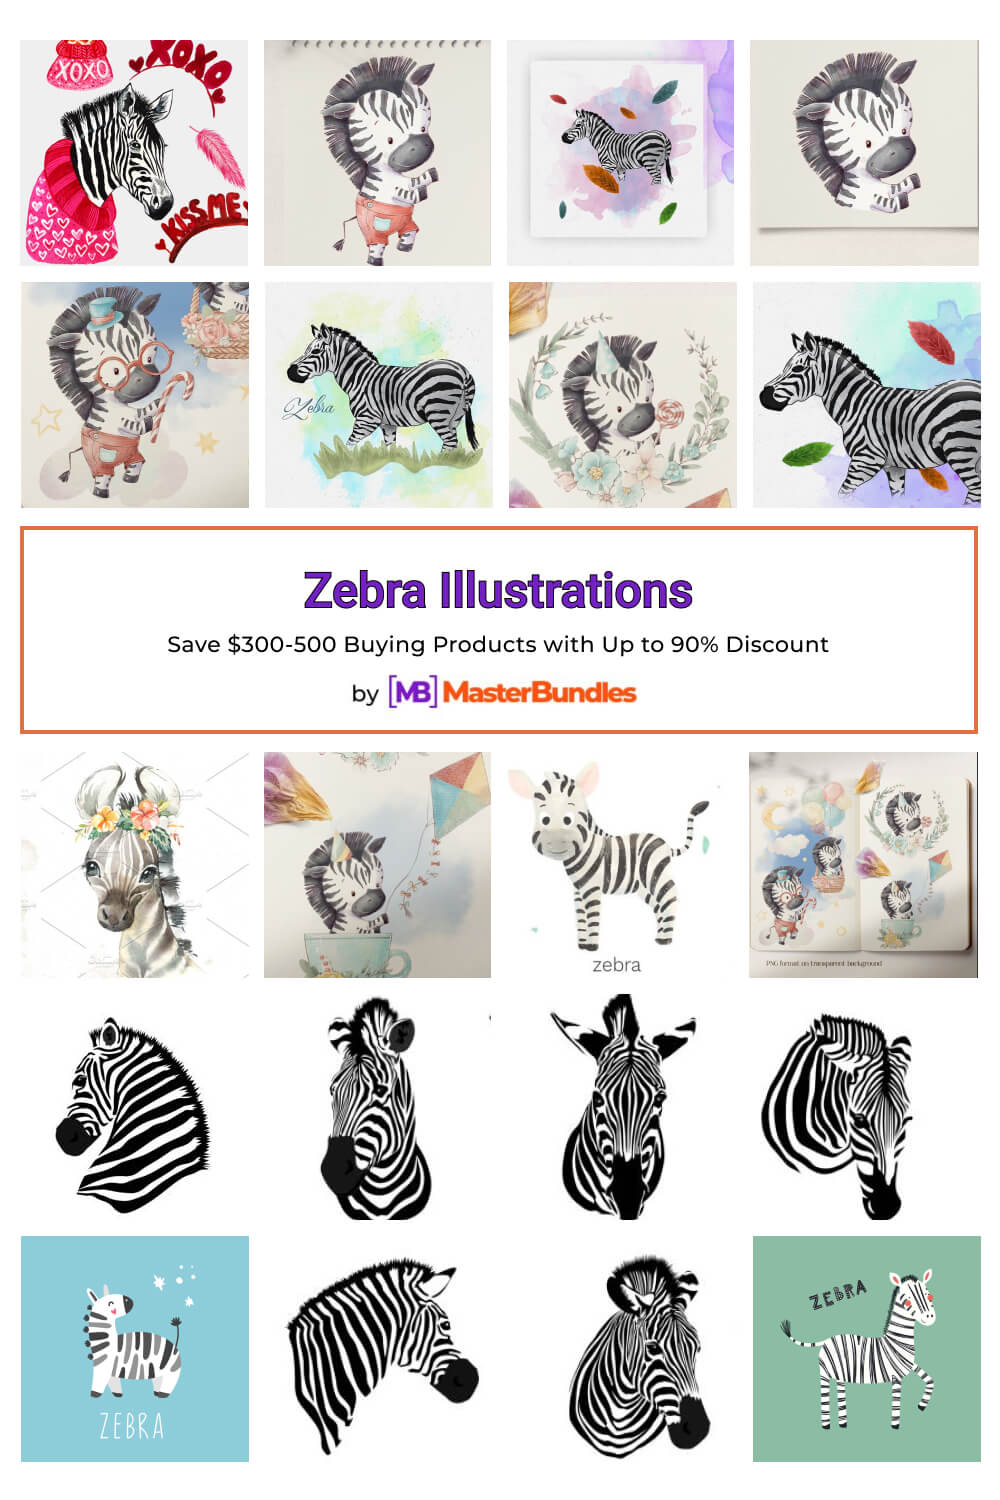 zebra illustrations pinterest image.